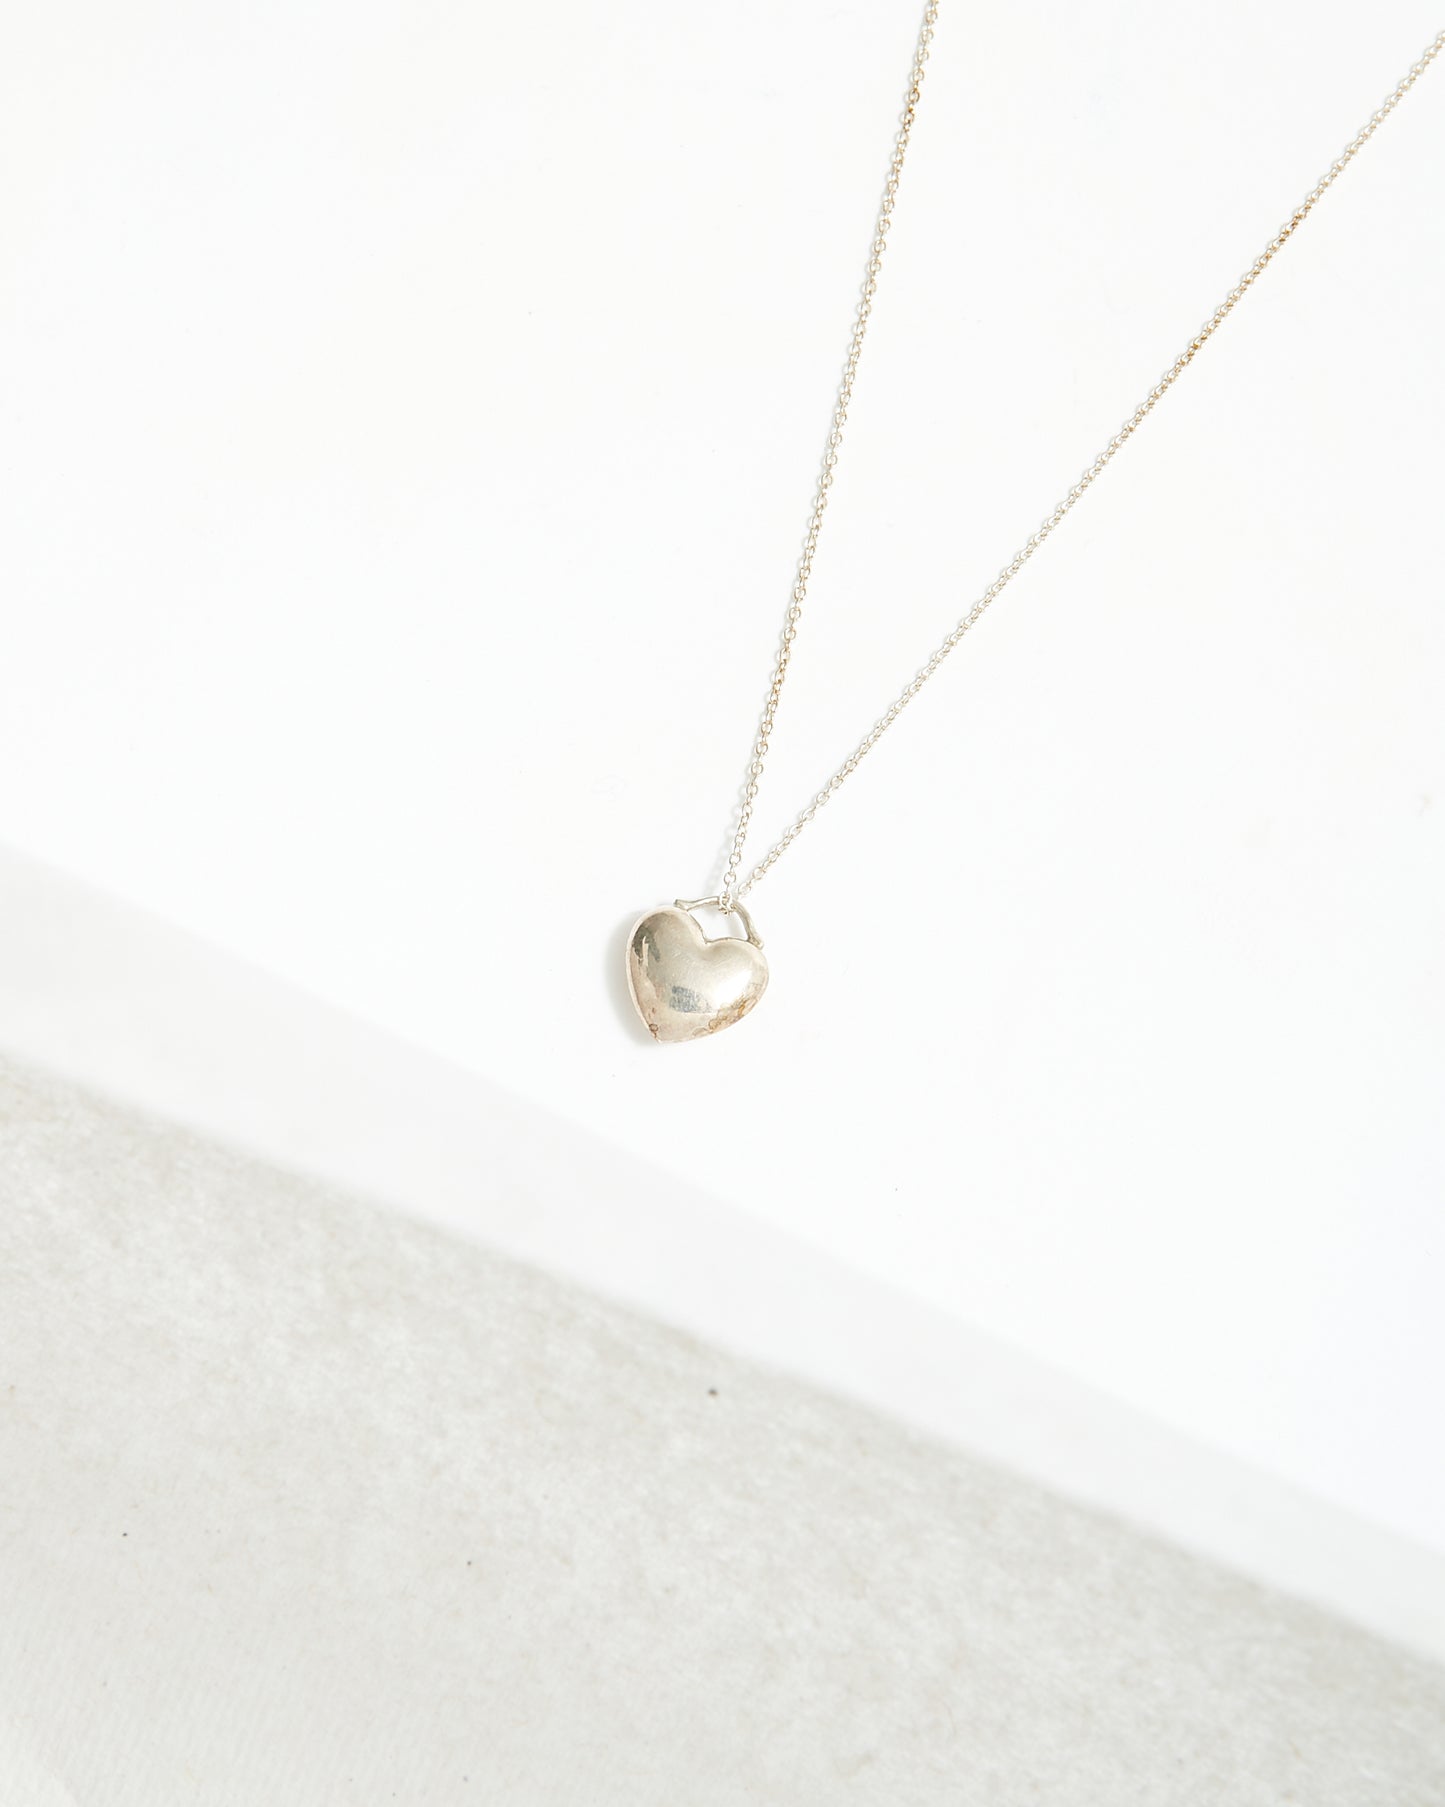 Tiffany Sterling Silver Heart Shape Pendant Necklace